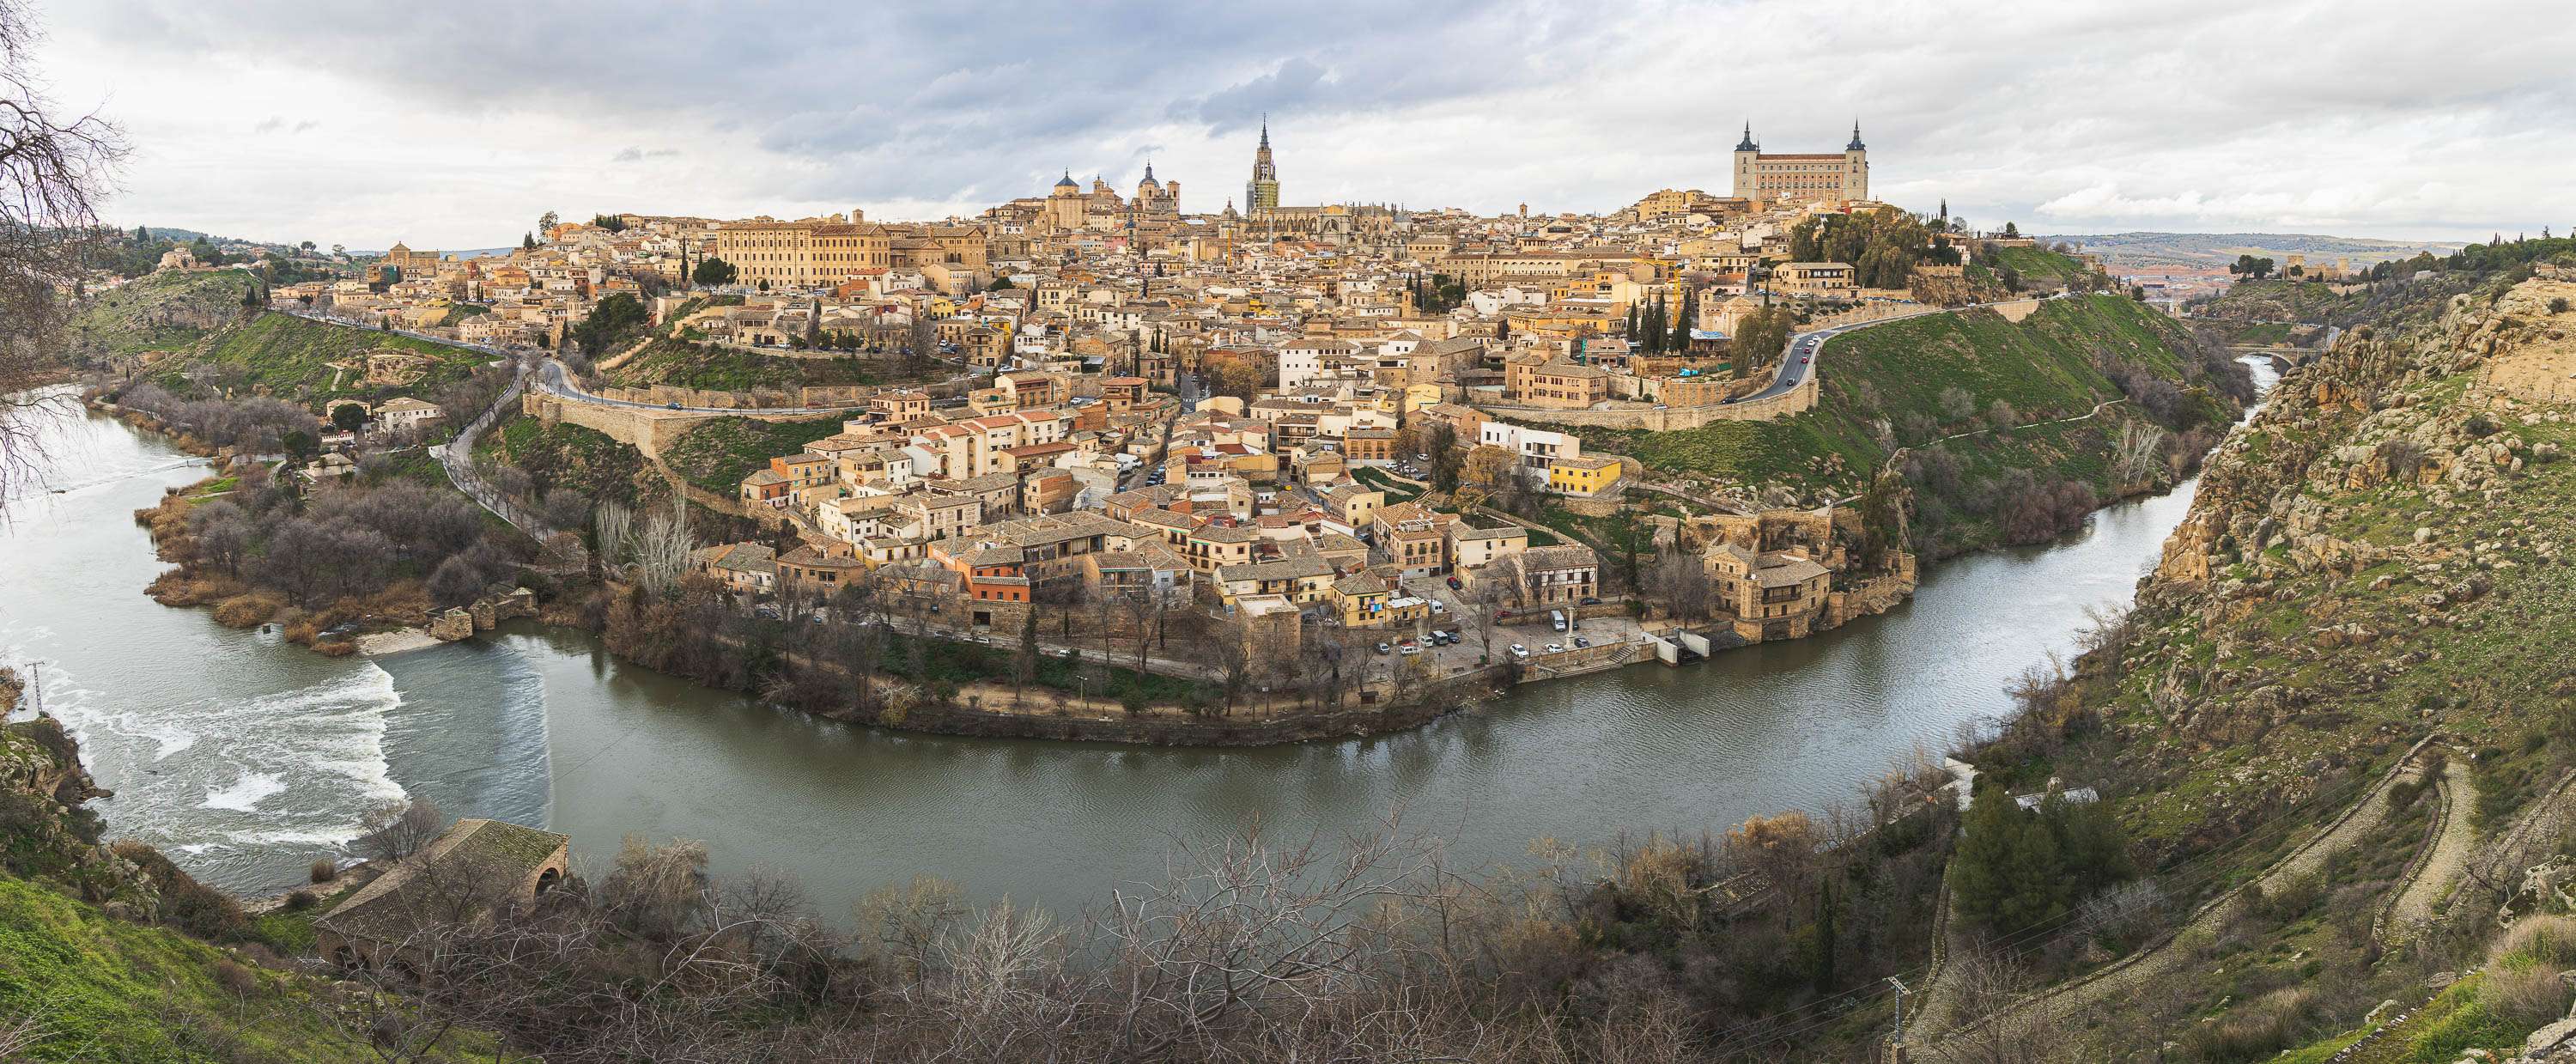 A photo of Toledo, Spain